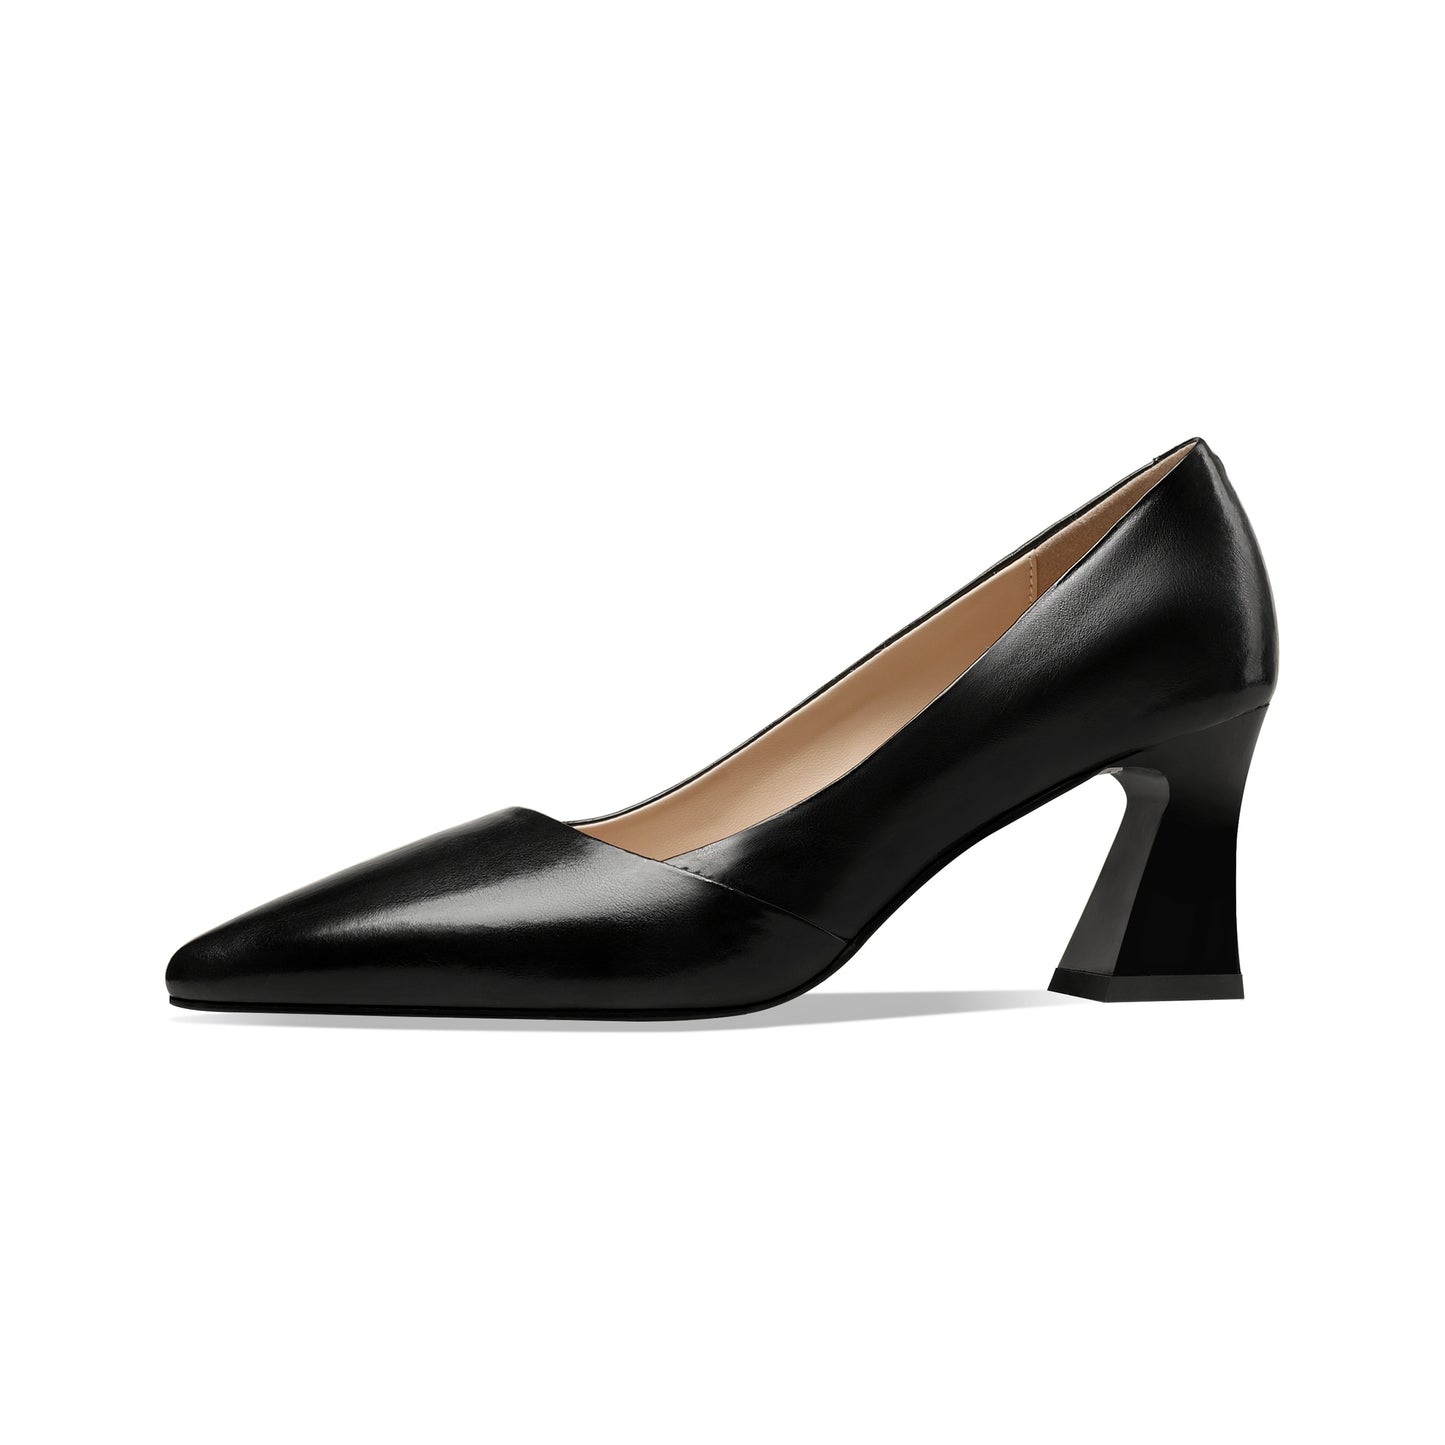 TinaCus Genuine Leather Women's Handmade Clear Pointed Toe Mid Spool Heel Slip On Elegant Office Pumps